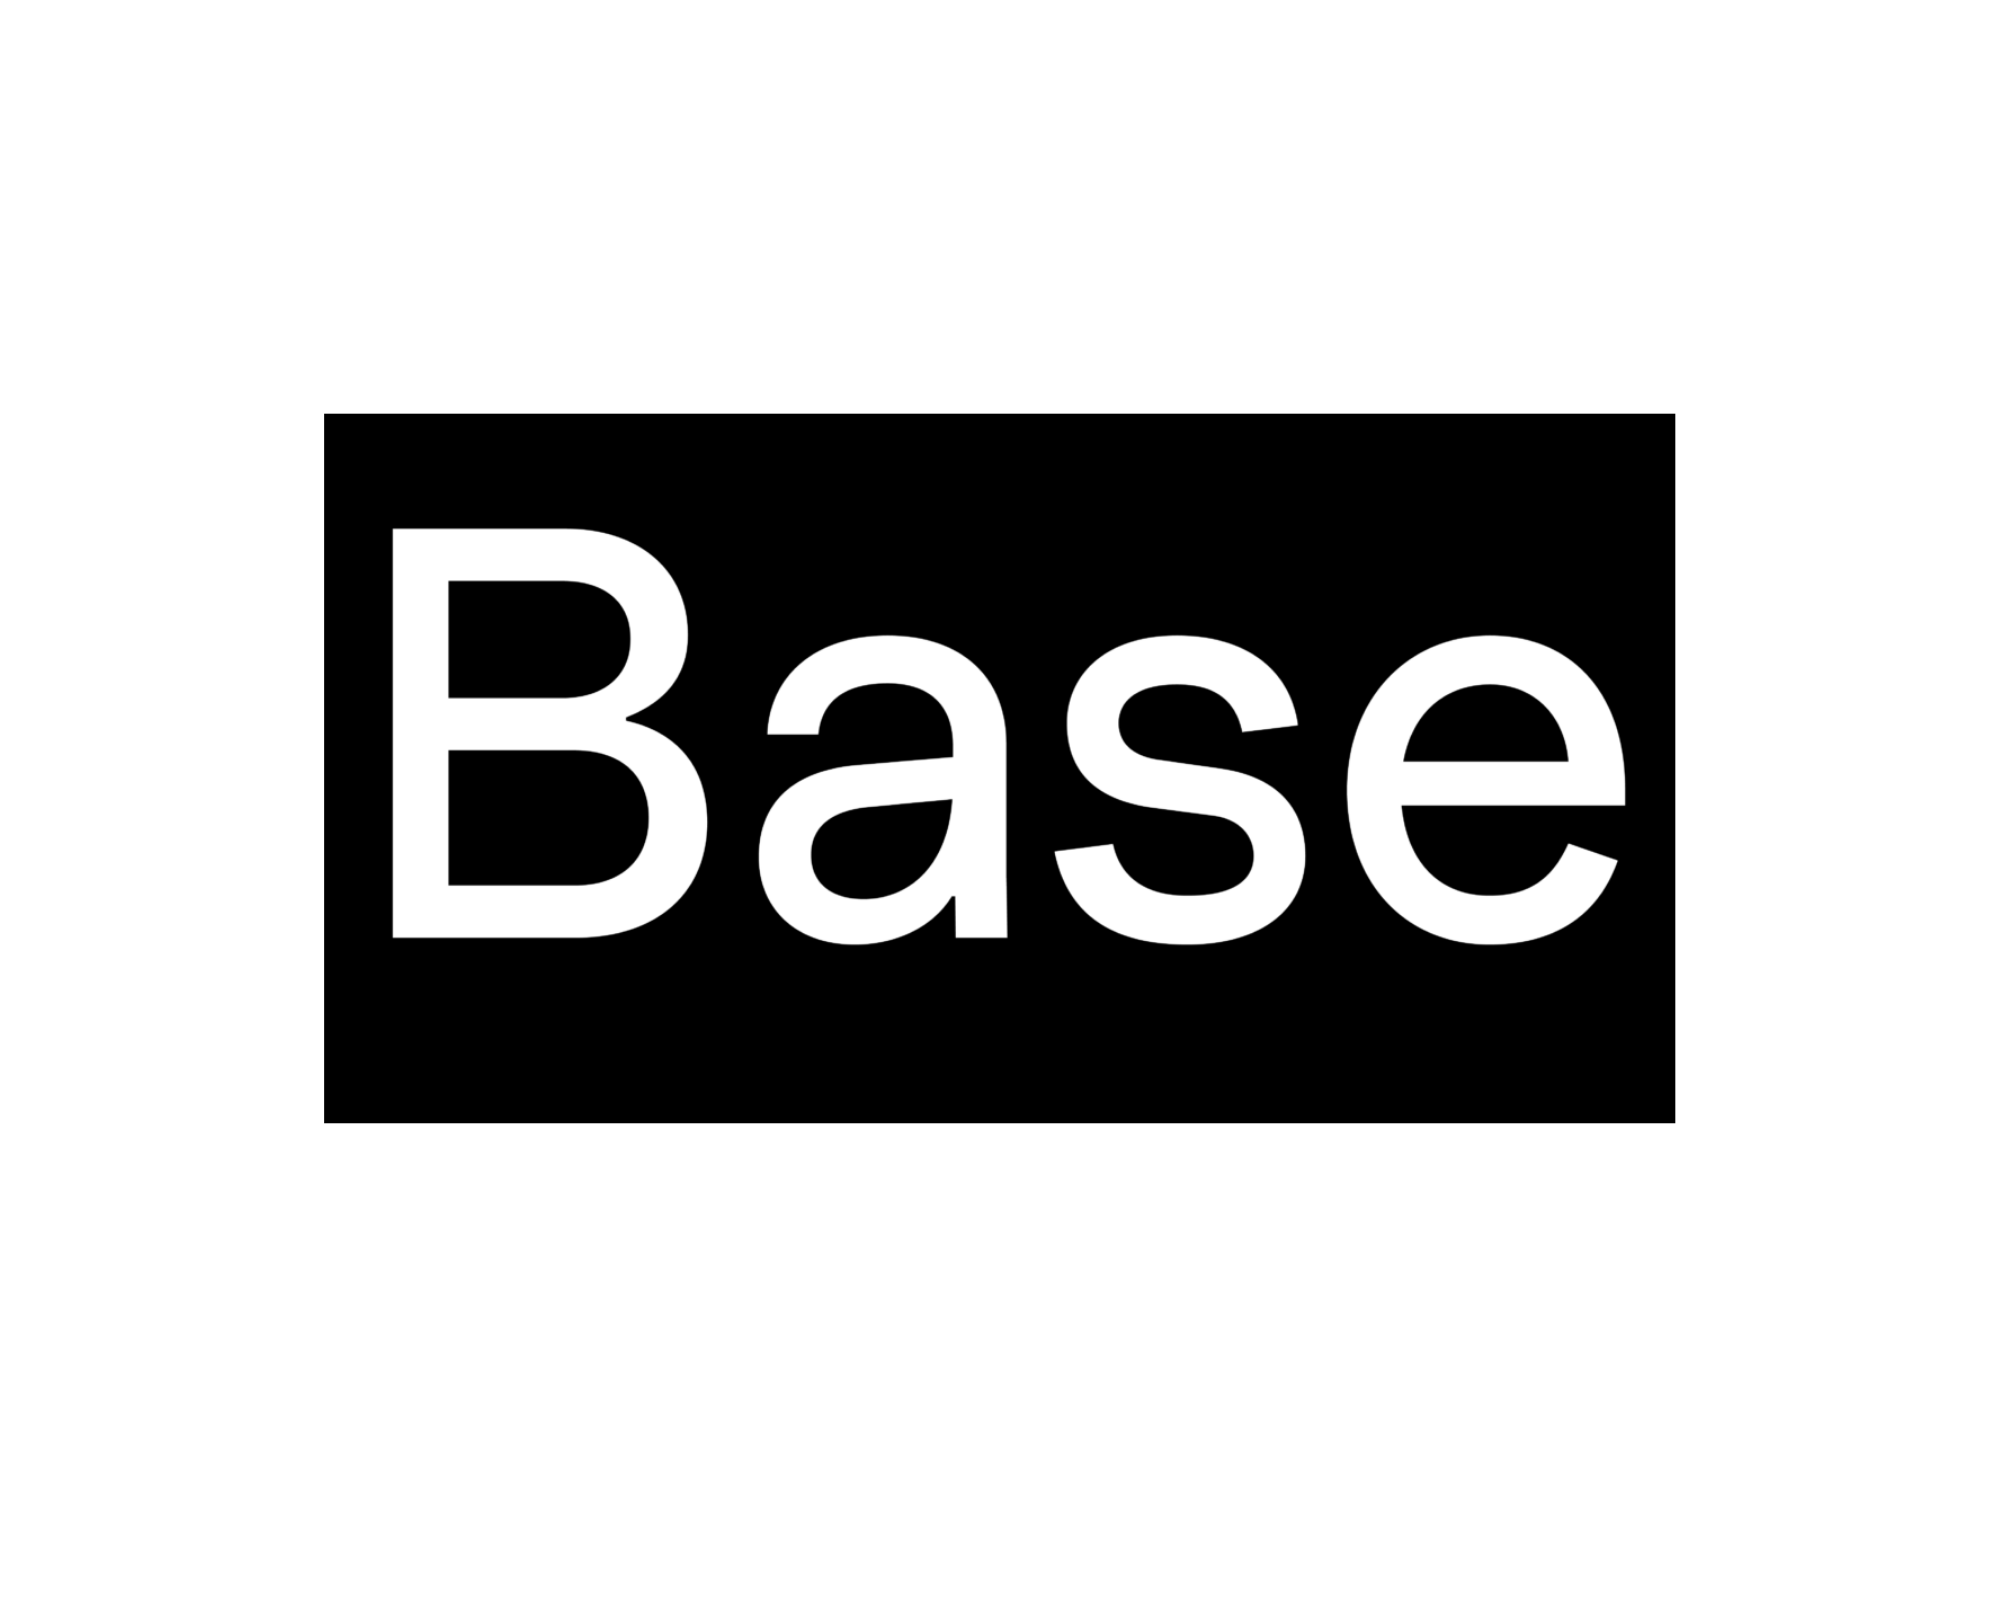 Base Design logo